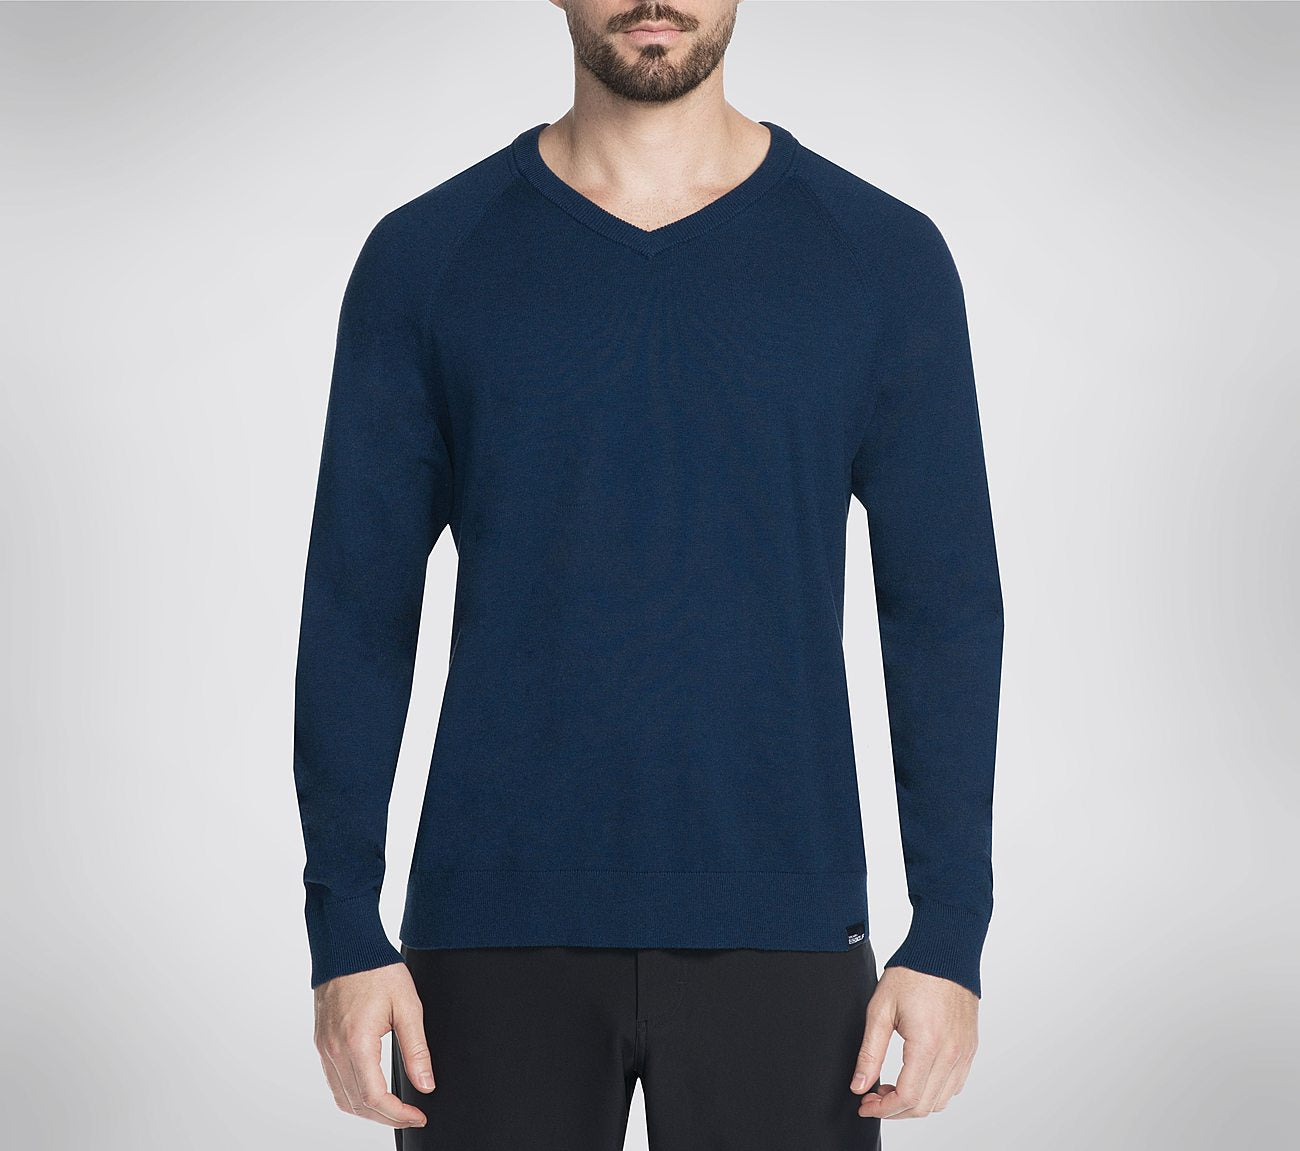 Fairway LS V-Neck Sweater Clothes Skechers